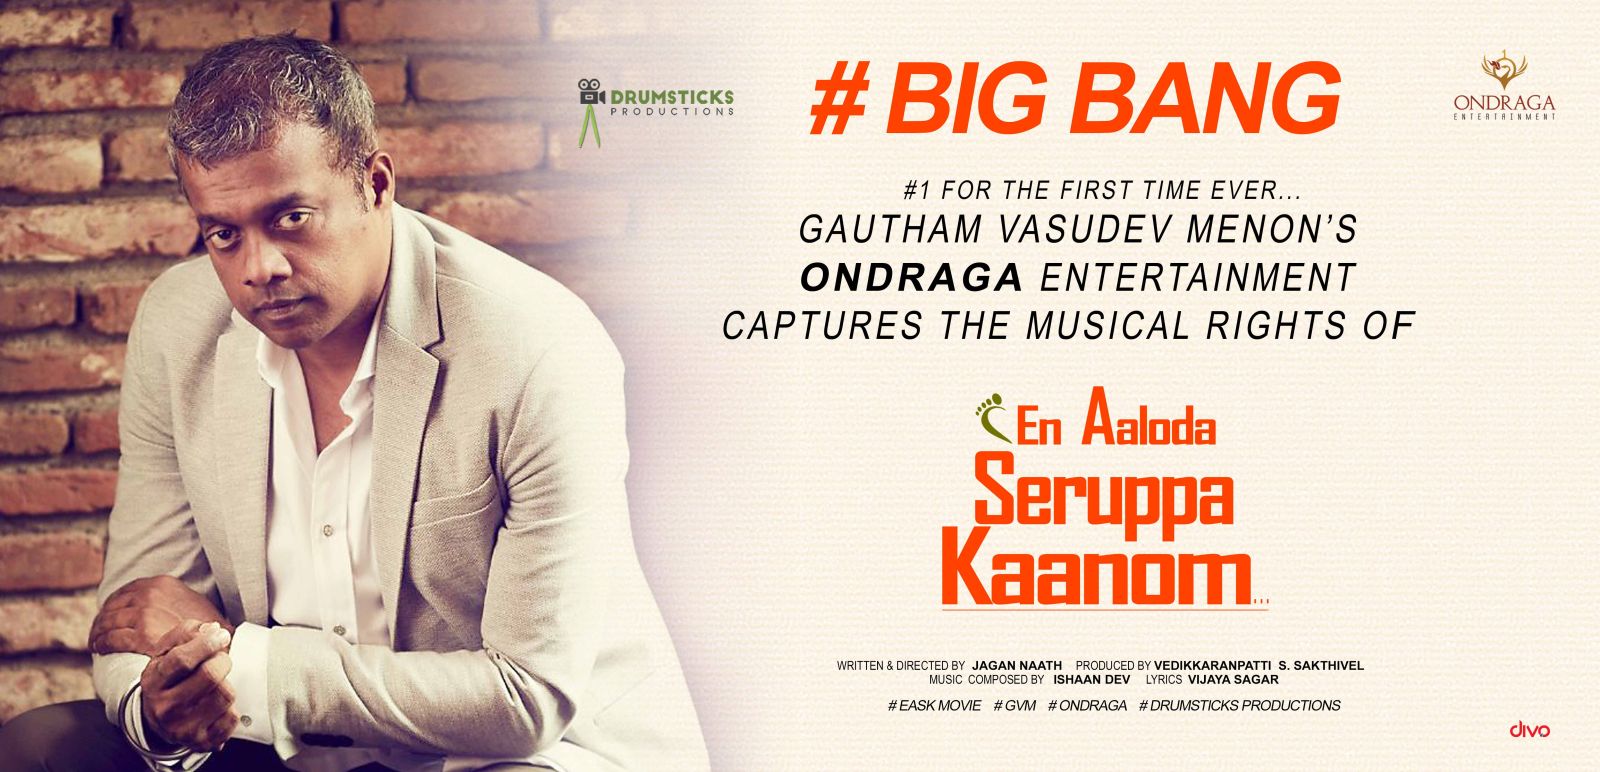 Ondraga Entertainment Captures the Musical Rights of En Aaloda Seruppa Kaanom (1)